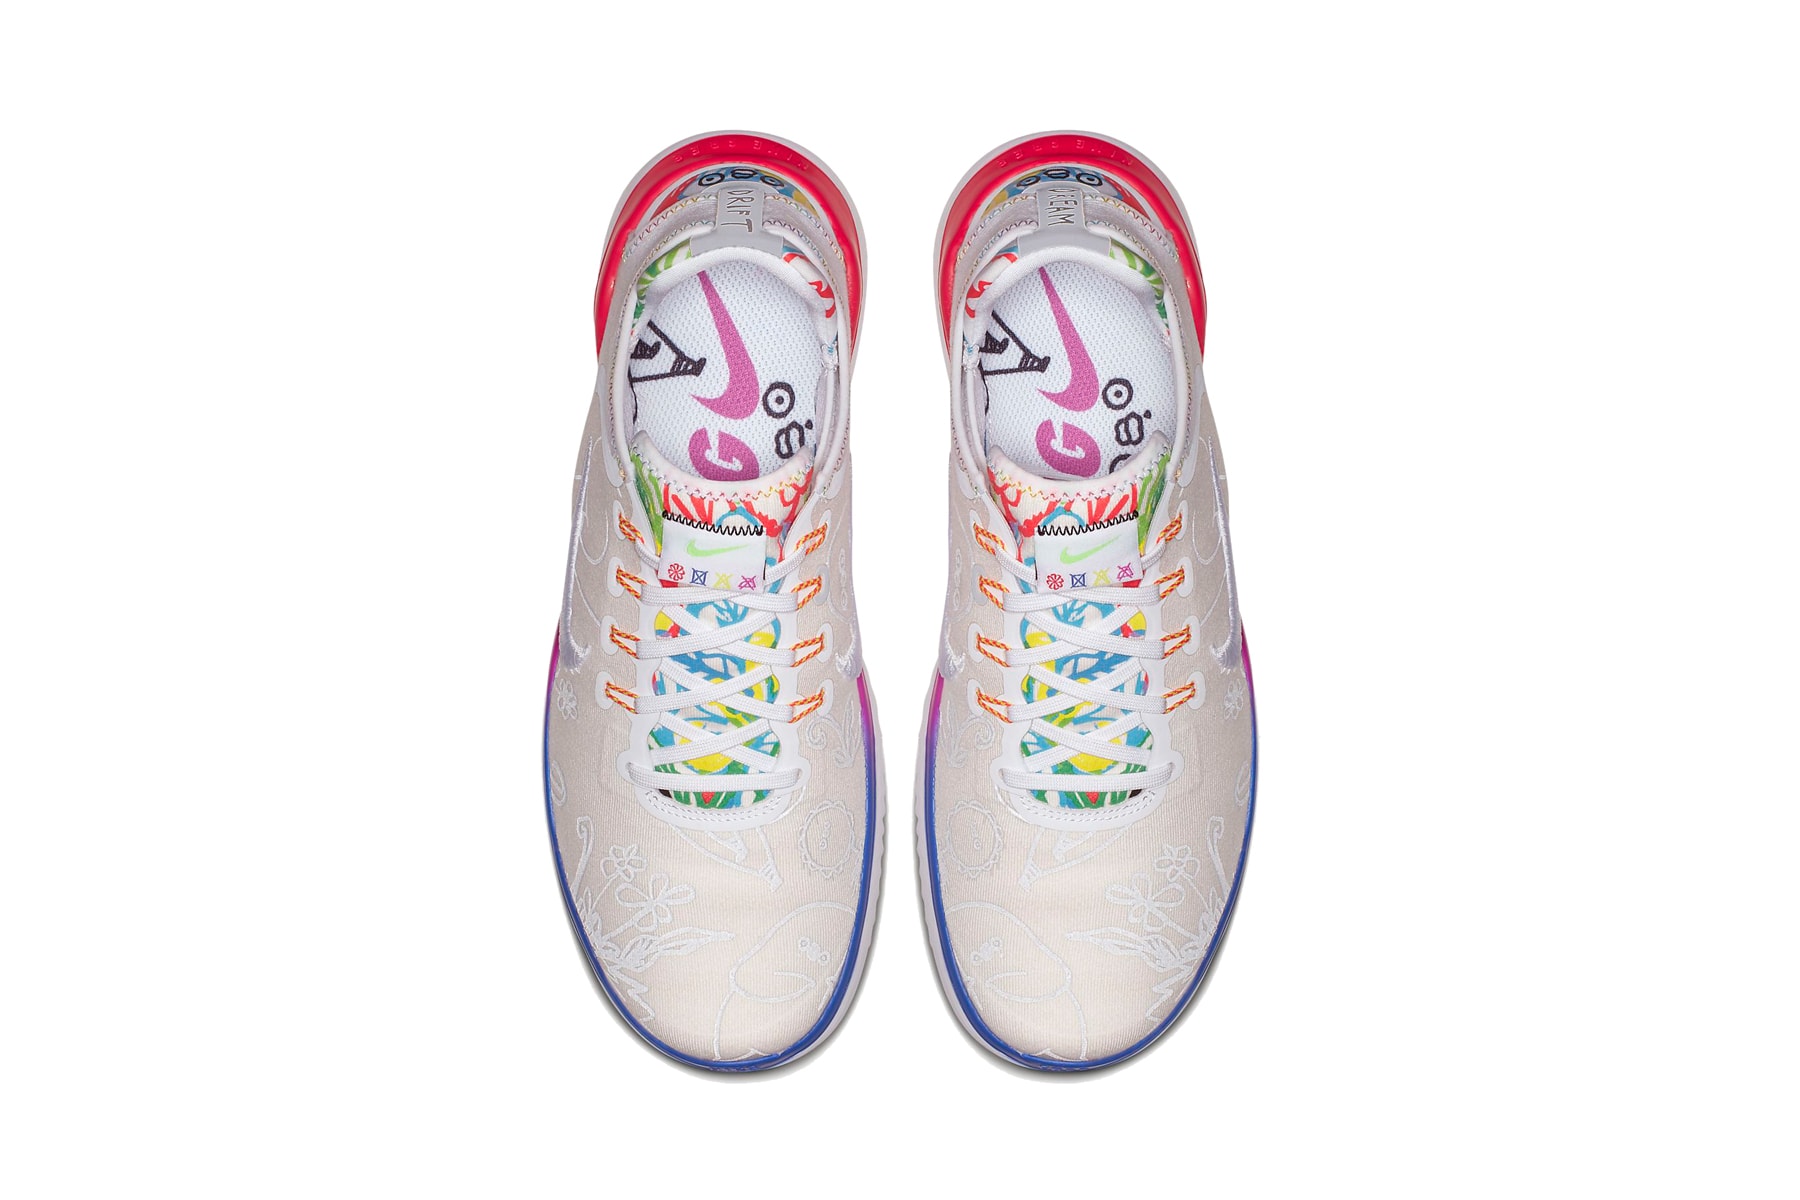 FLABJACKS Nike Free RN Expression Artist Series ton mak shanghai china sneaker shoe release hong kong release april 12